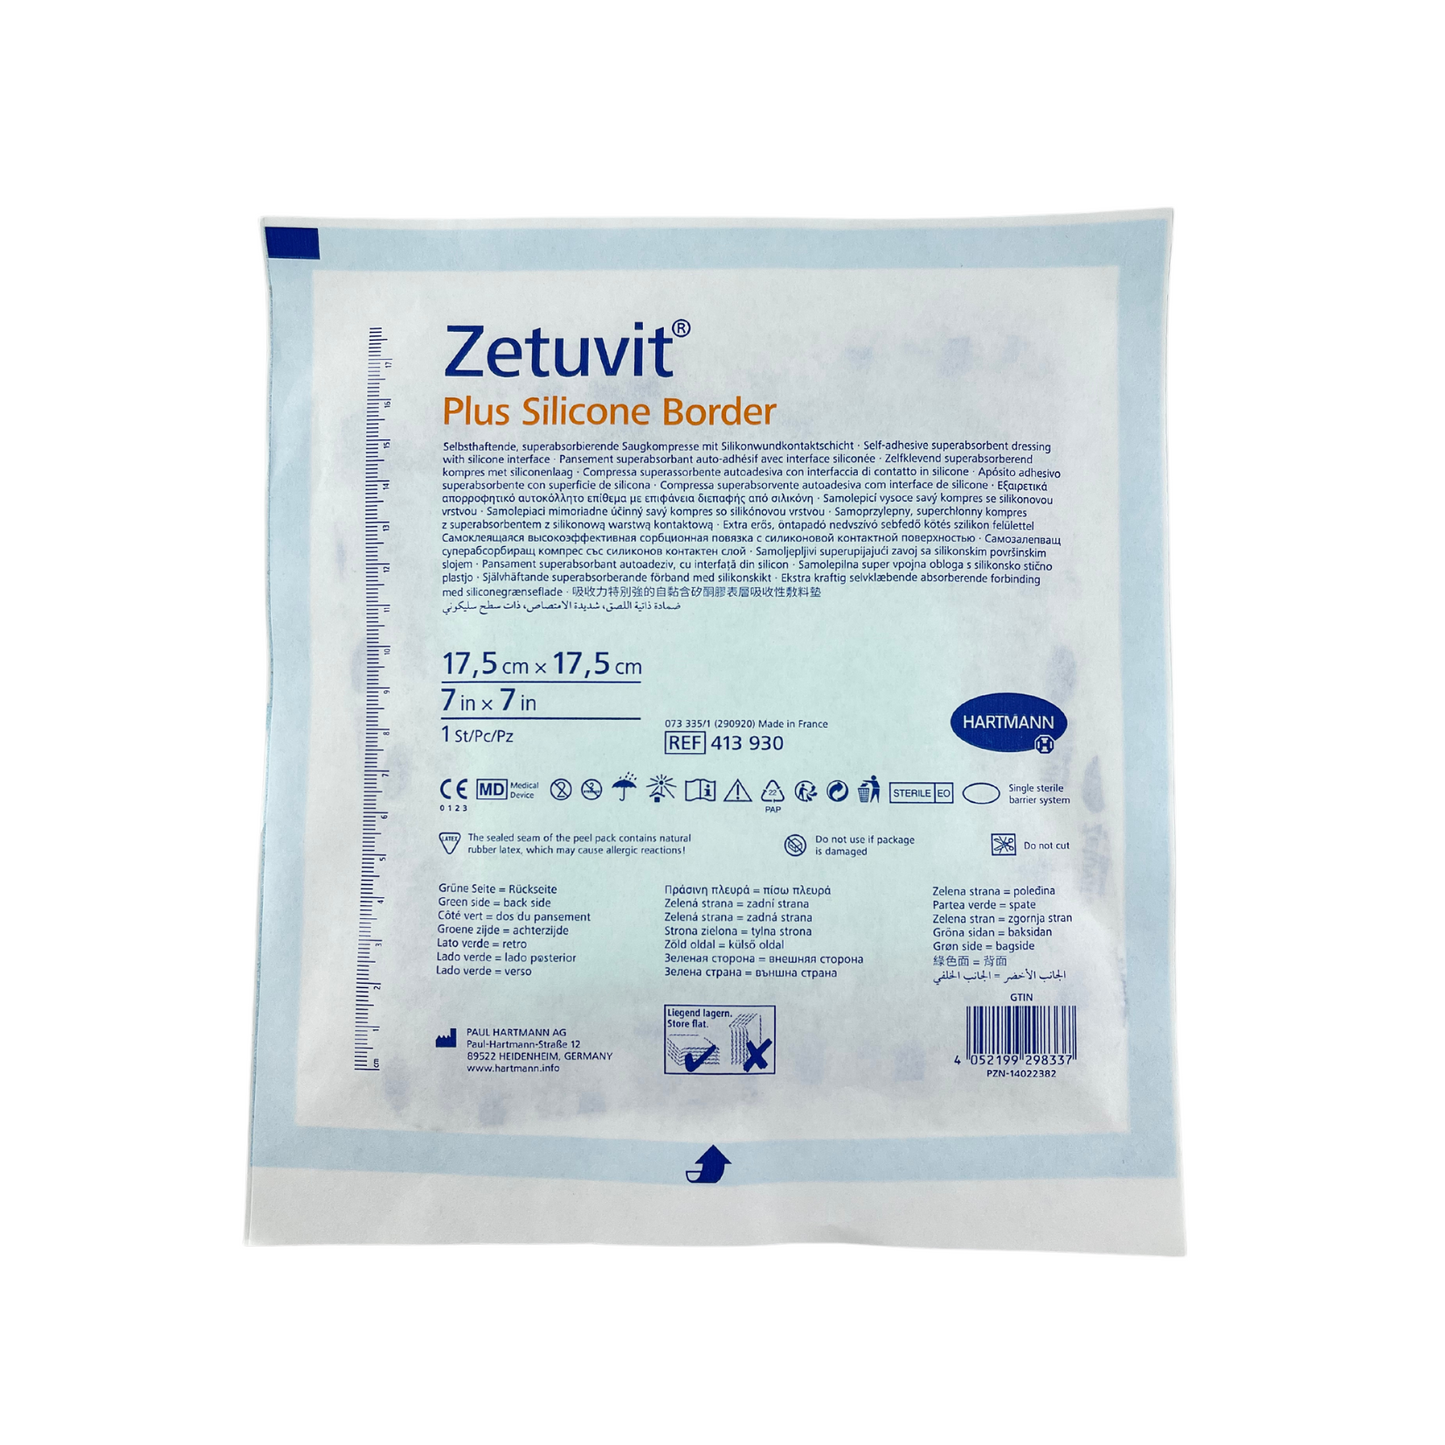 Zetuvit Plus Silicone Border (1)